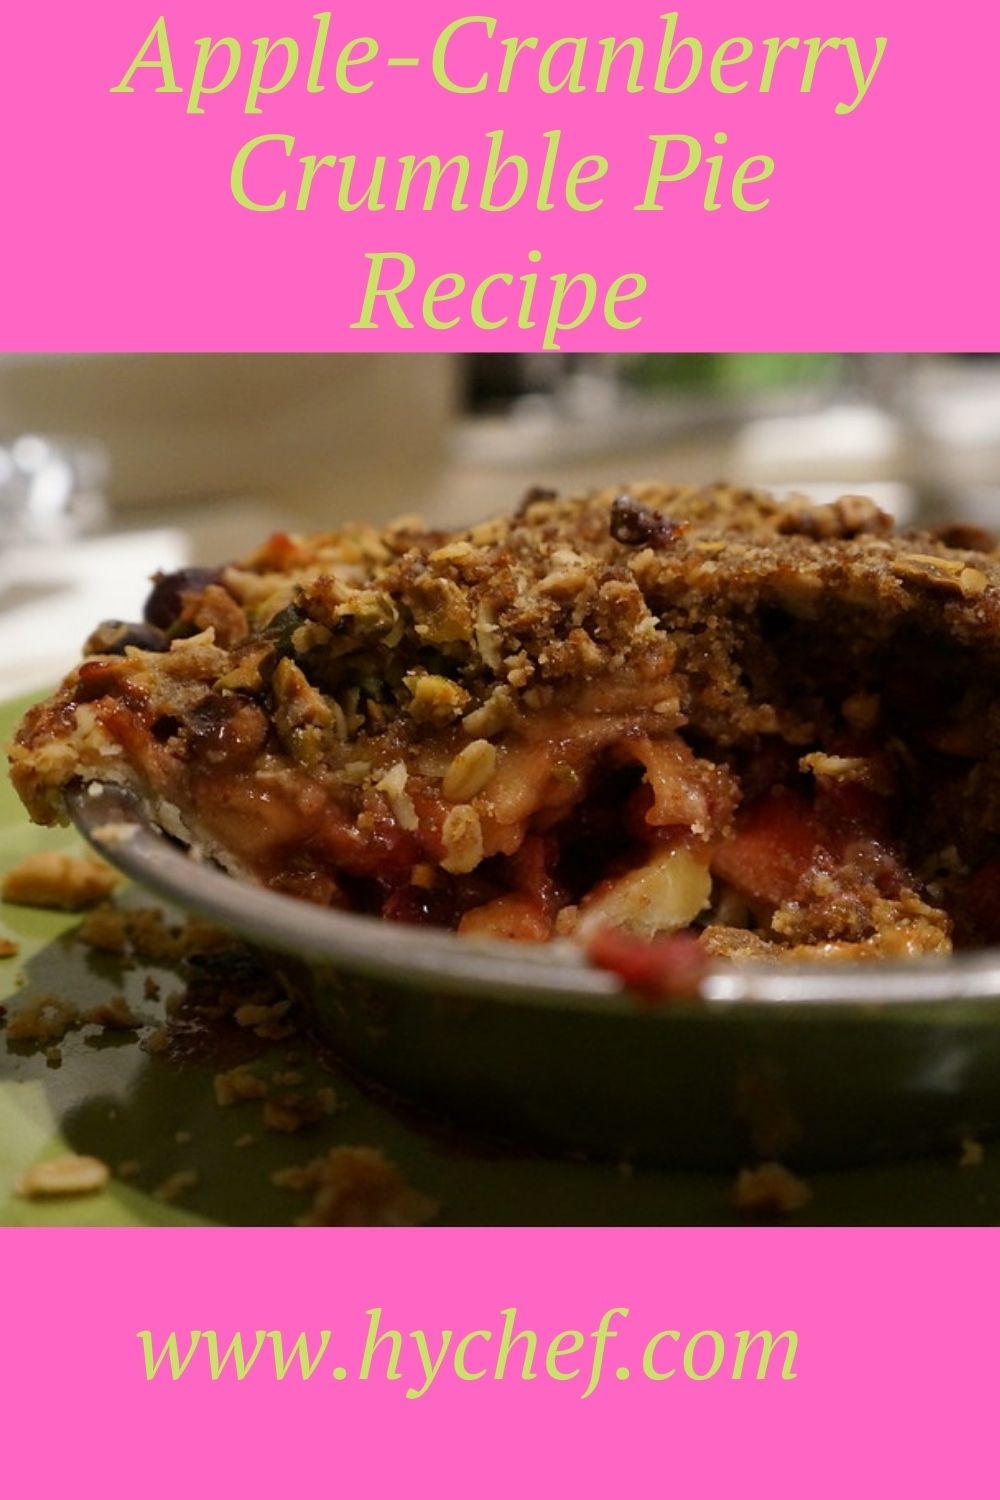 Apple-Cranberry Crumble Pie Recipe